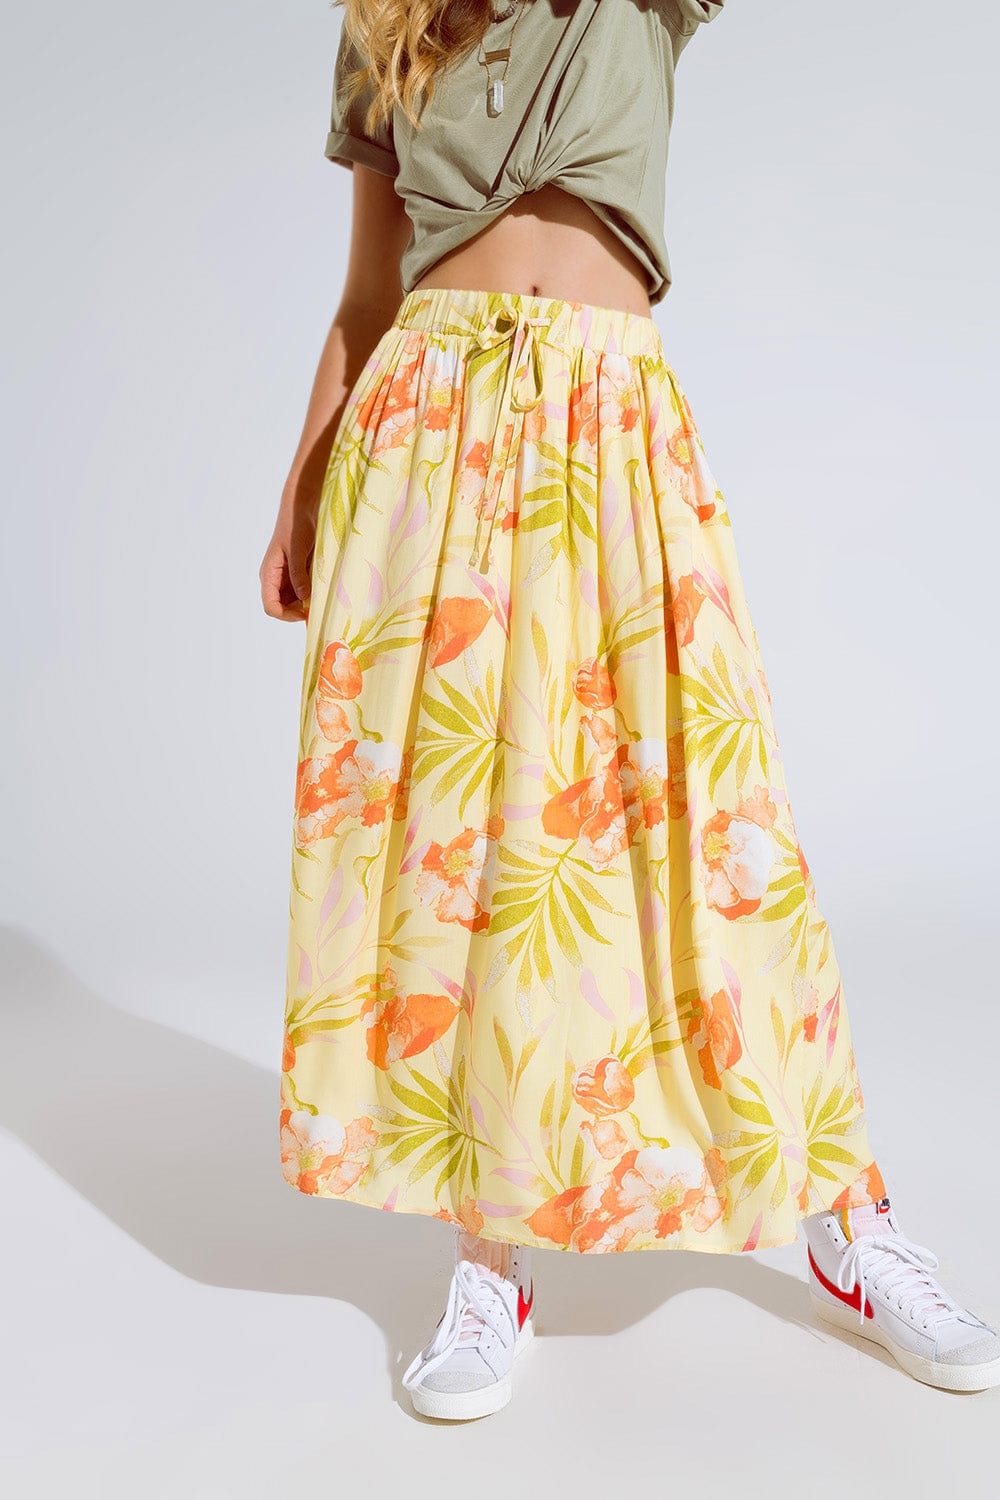 Q2 Women's Skirt Yellow Maxi Skirt With Tropical Print